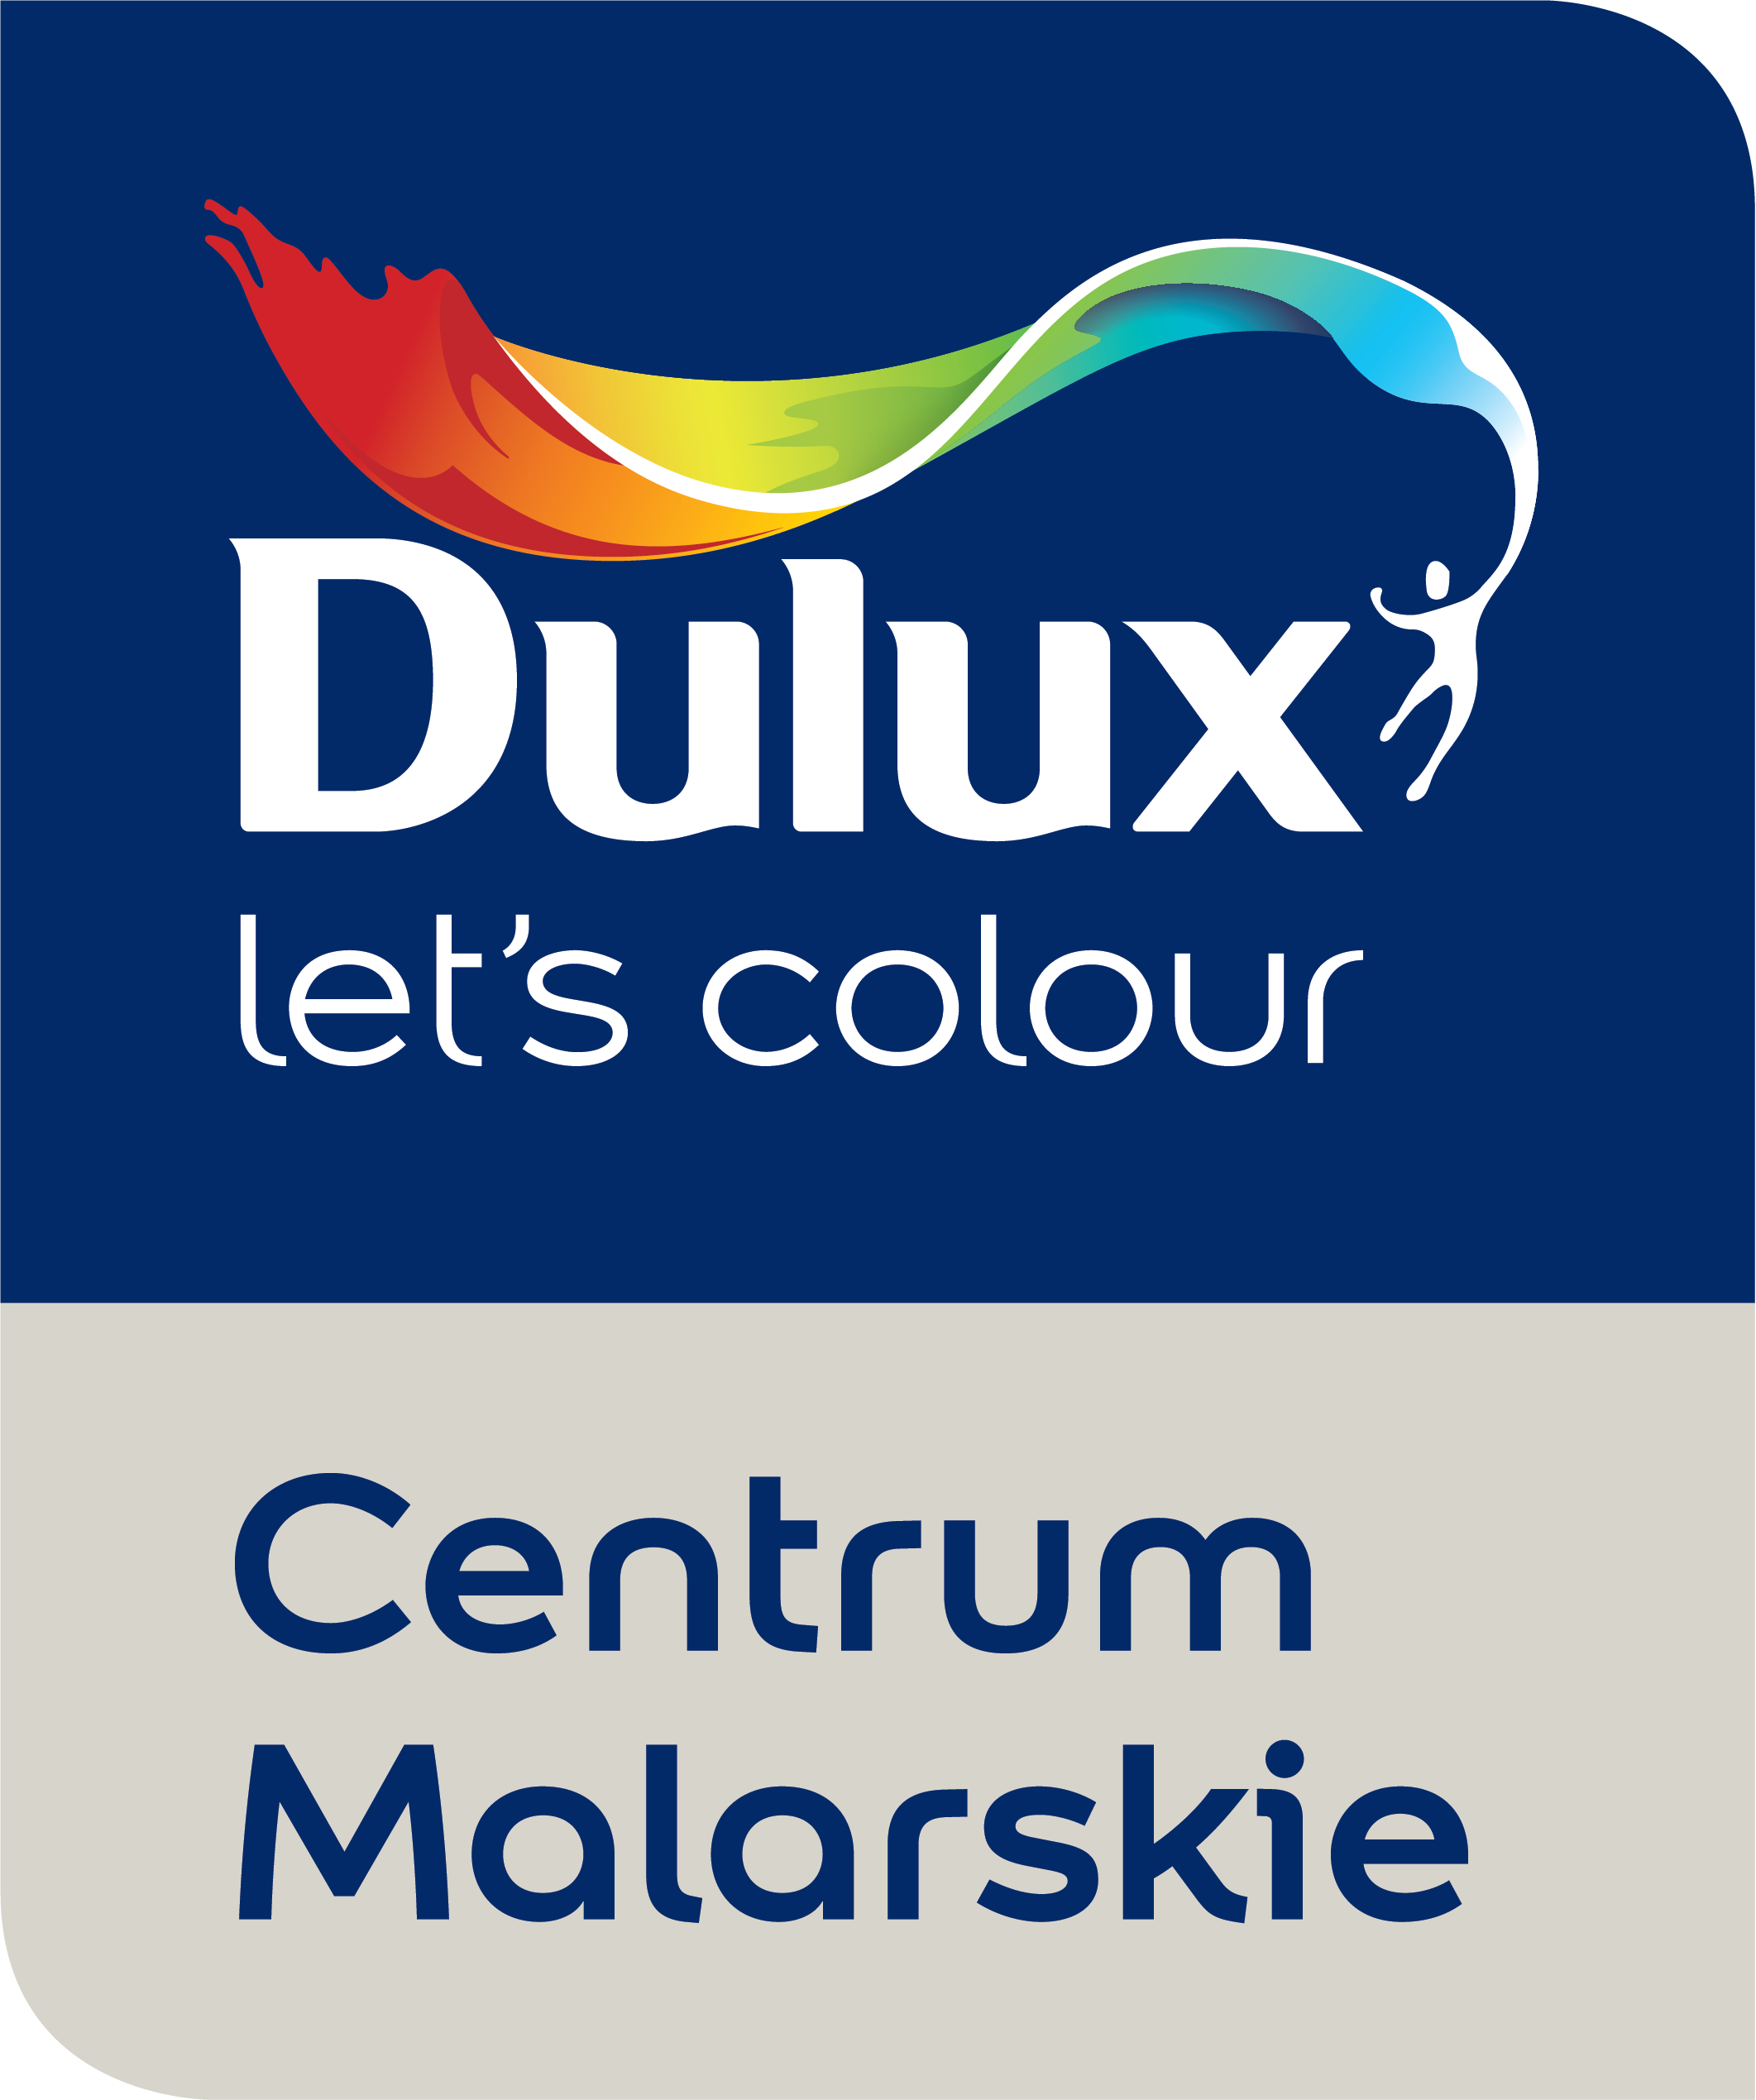 Dulux Centrum Malarskie